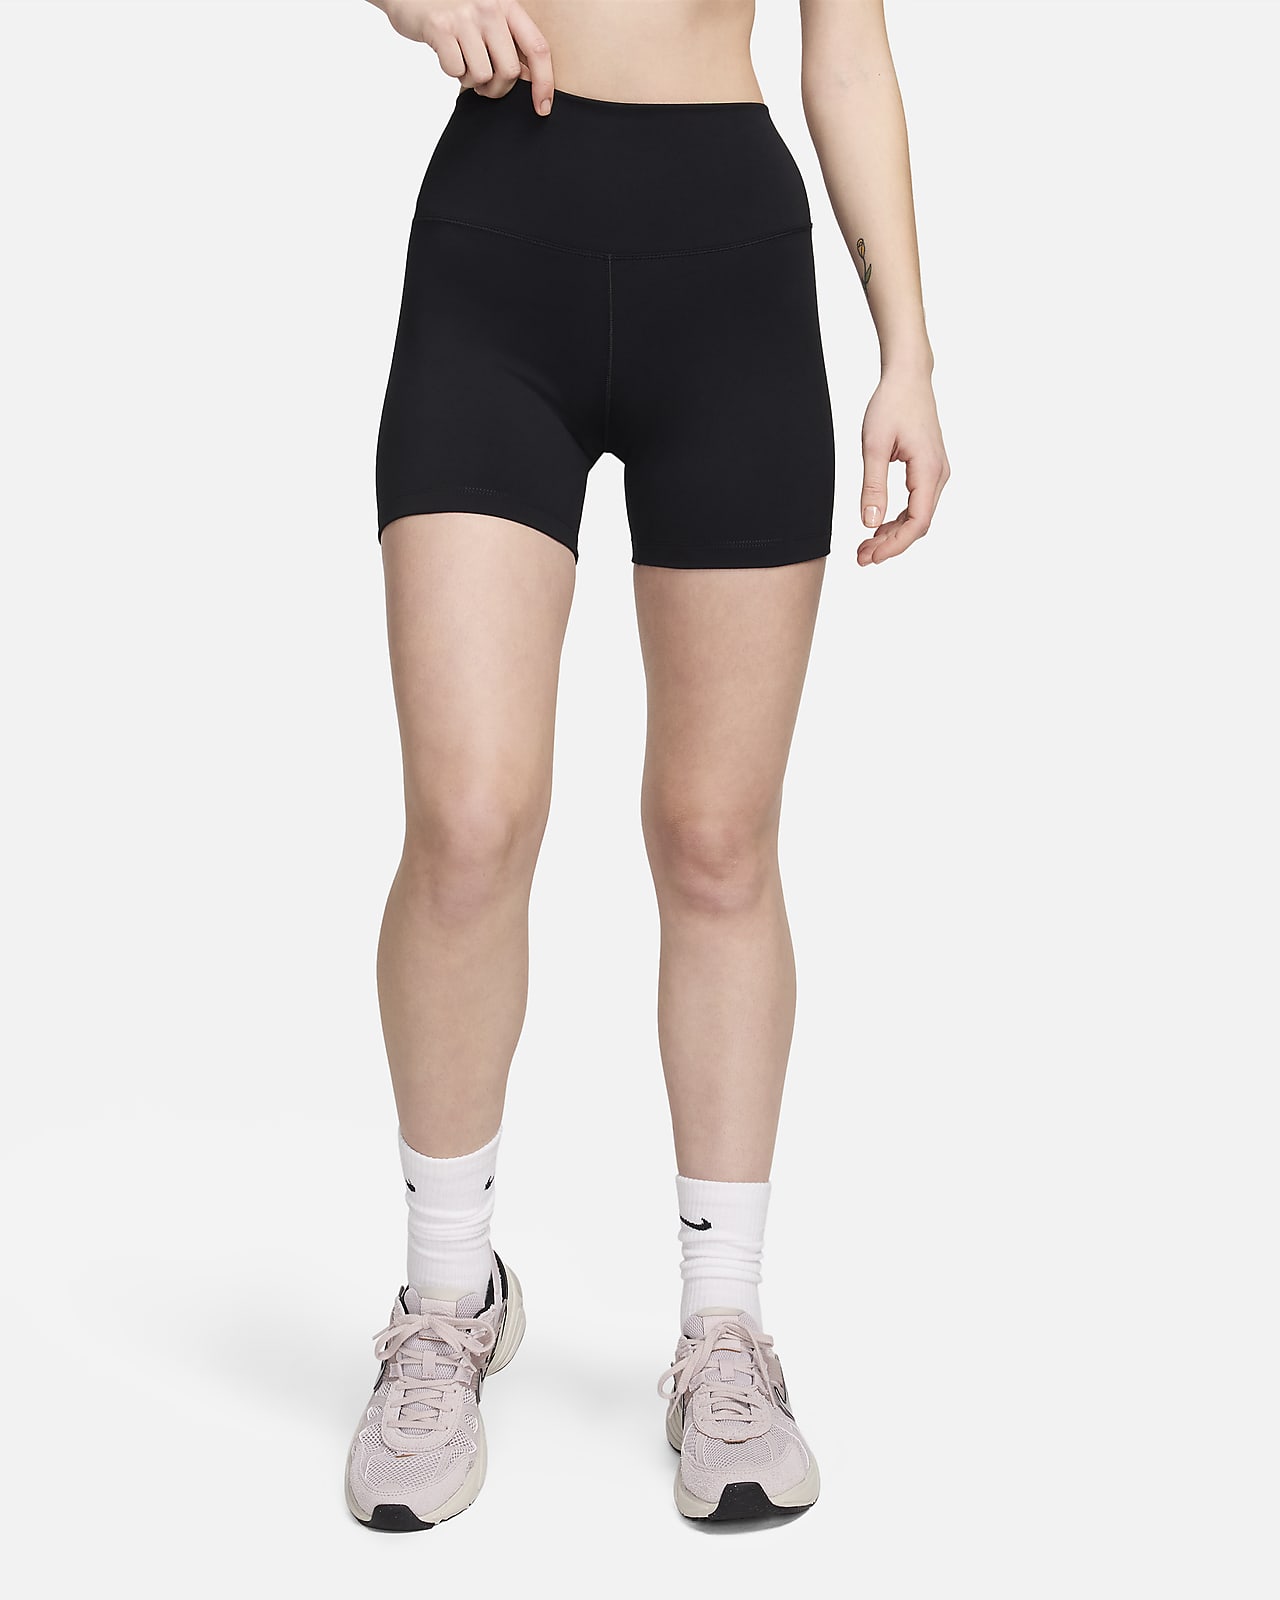 Nike One magas derekú, 13 cm-es, női kerékpáros rövidnadrág